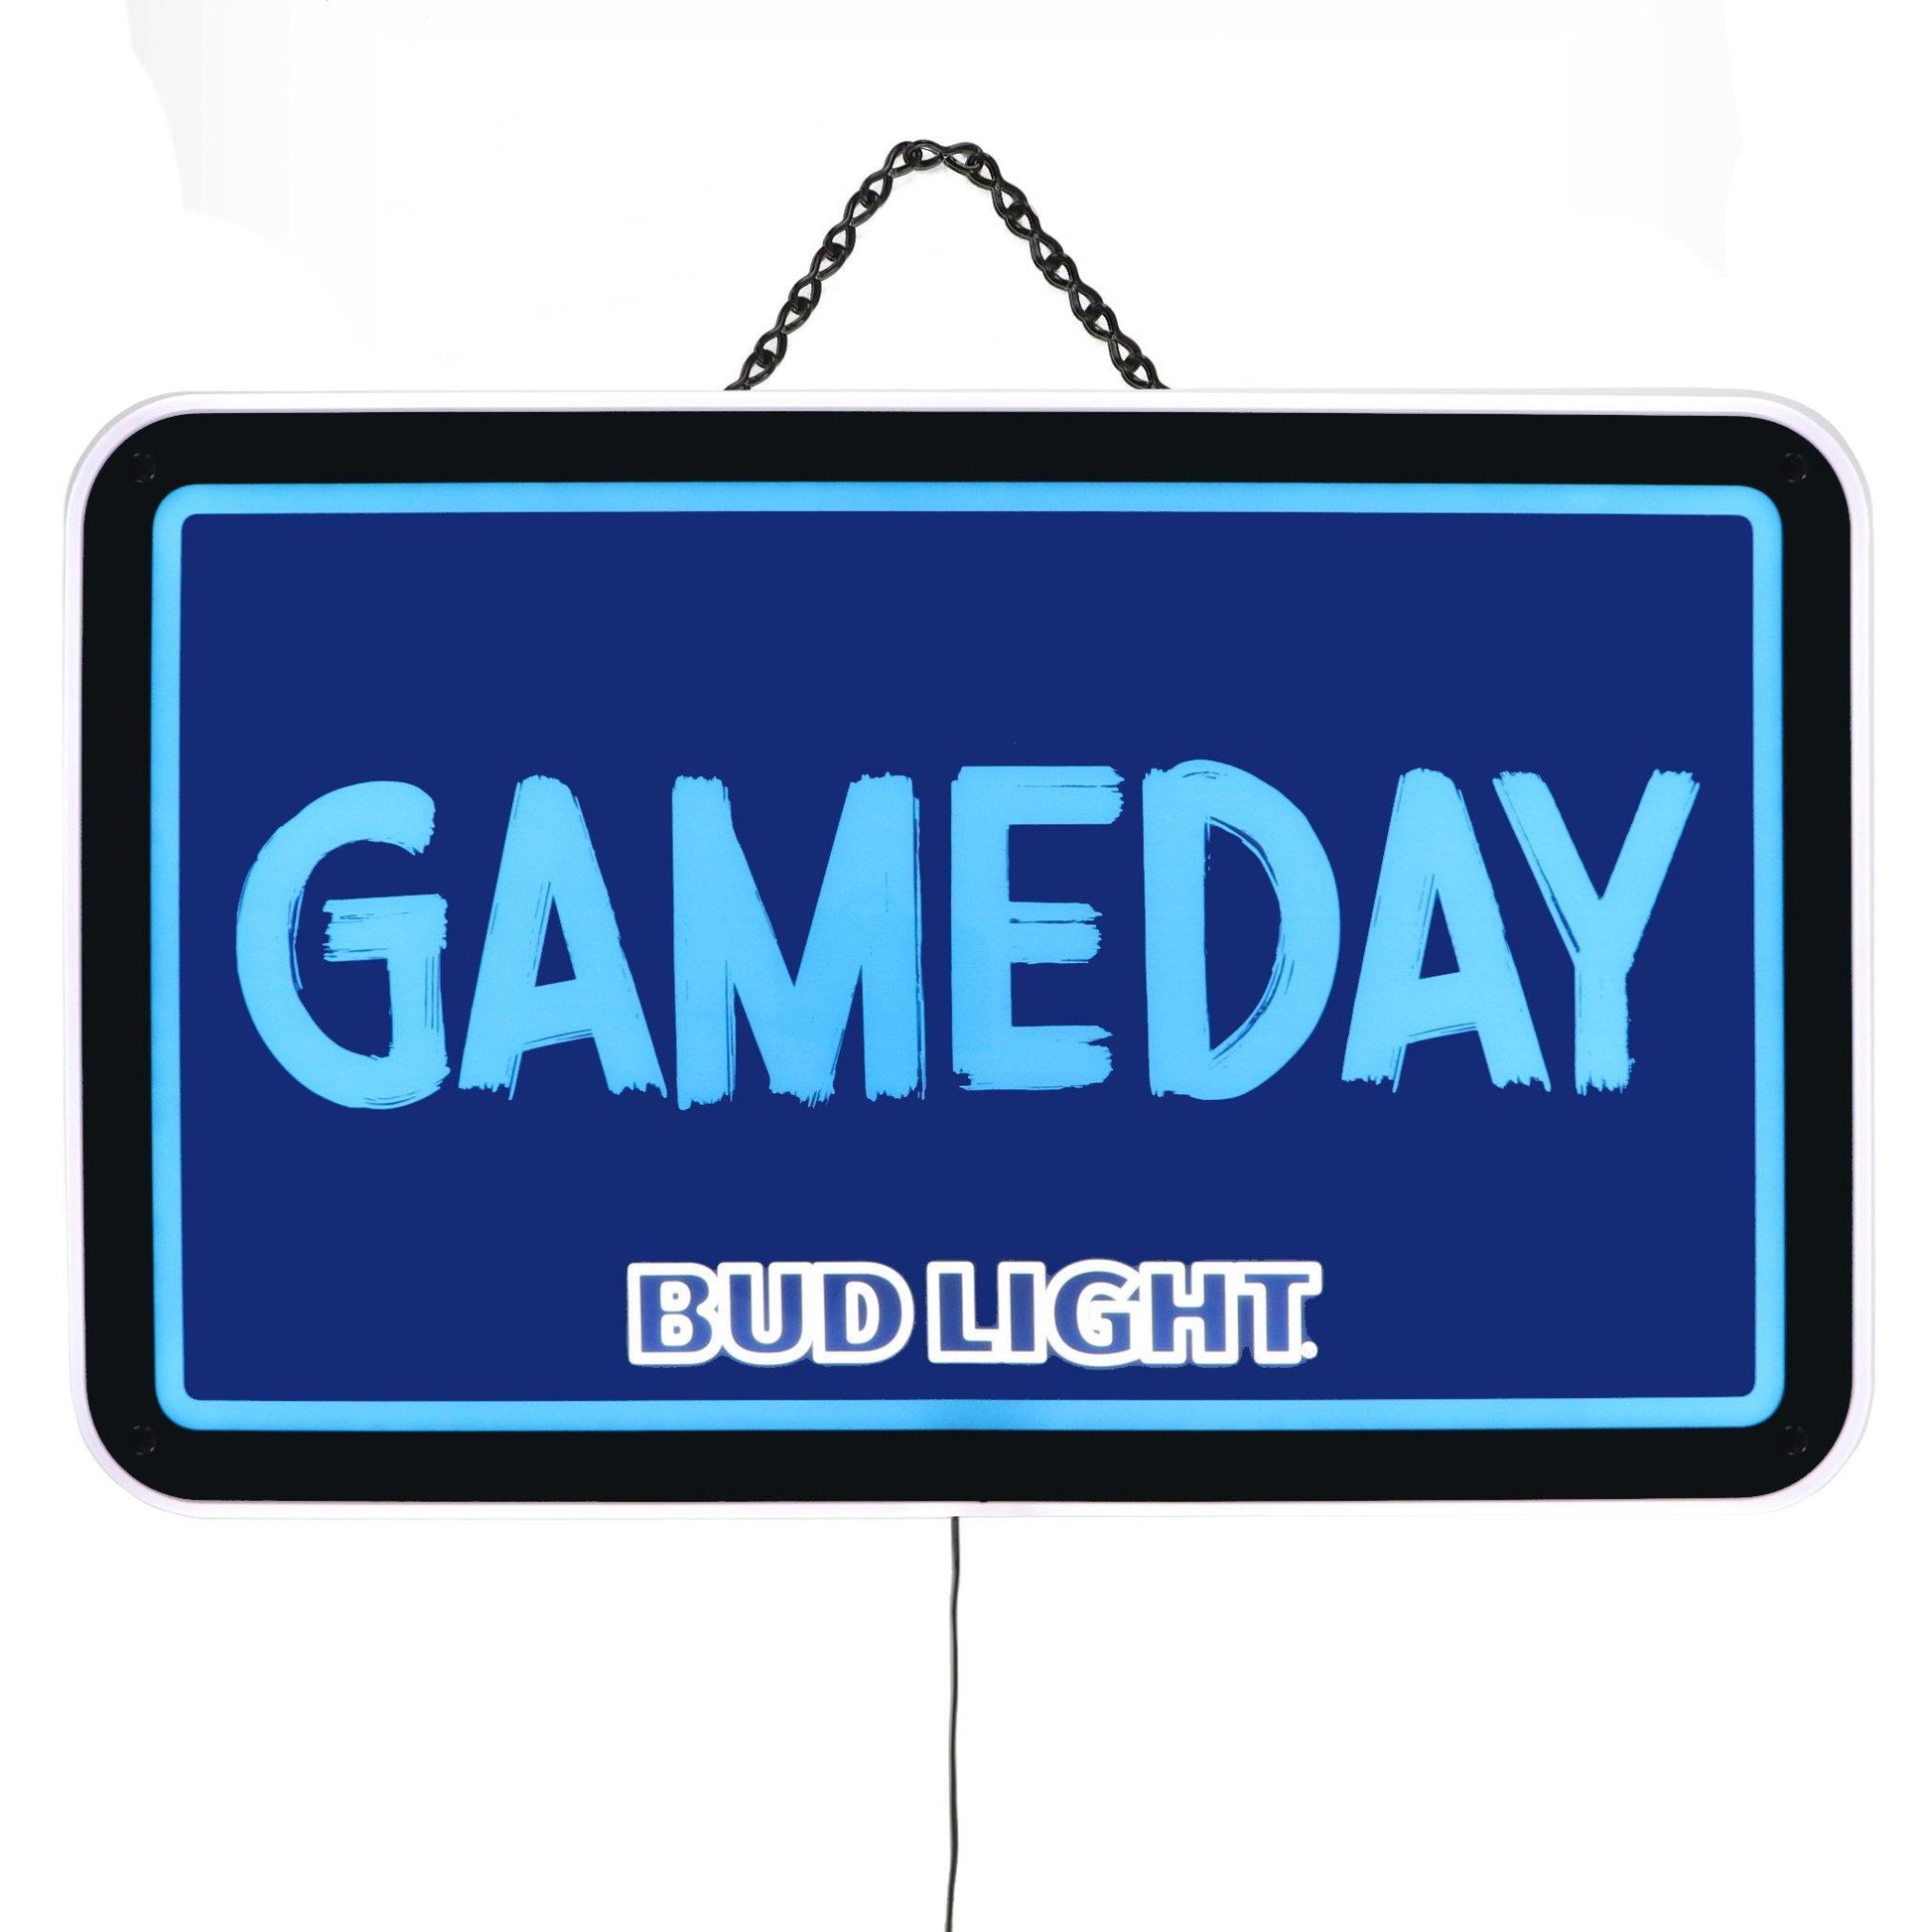 bud light game day led neon sign